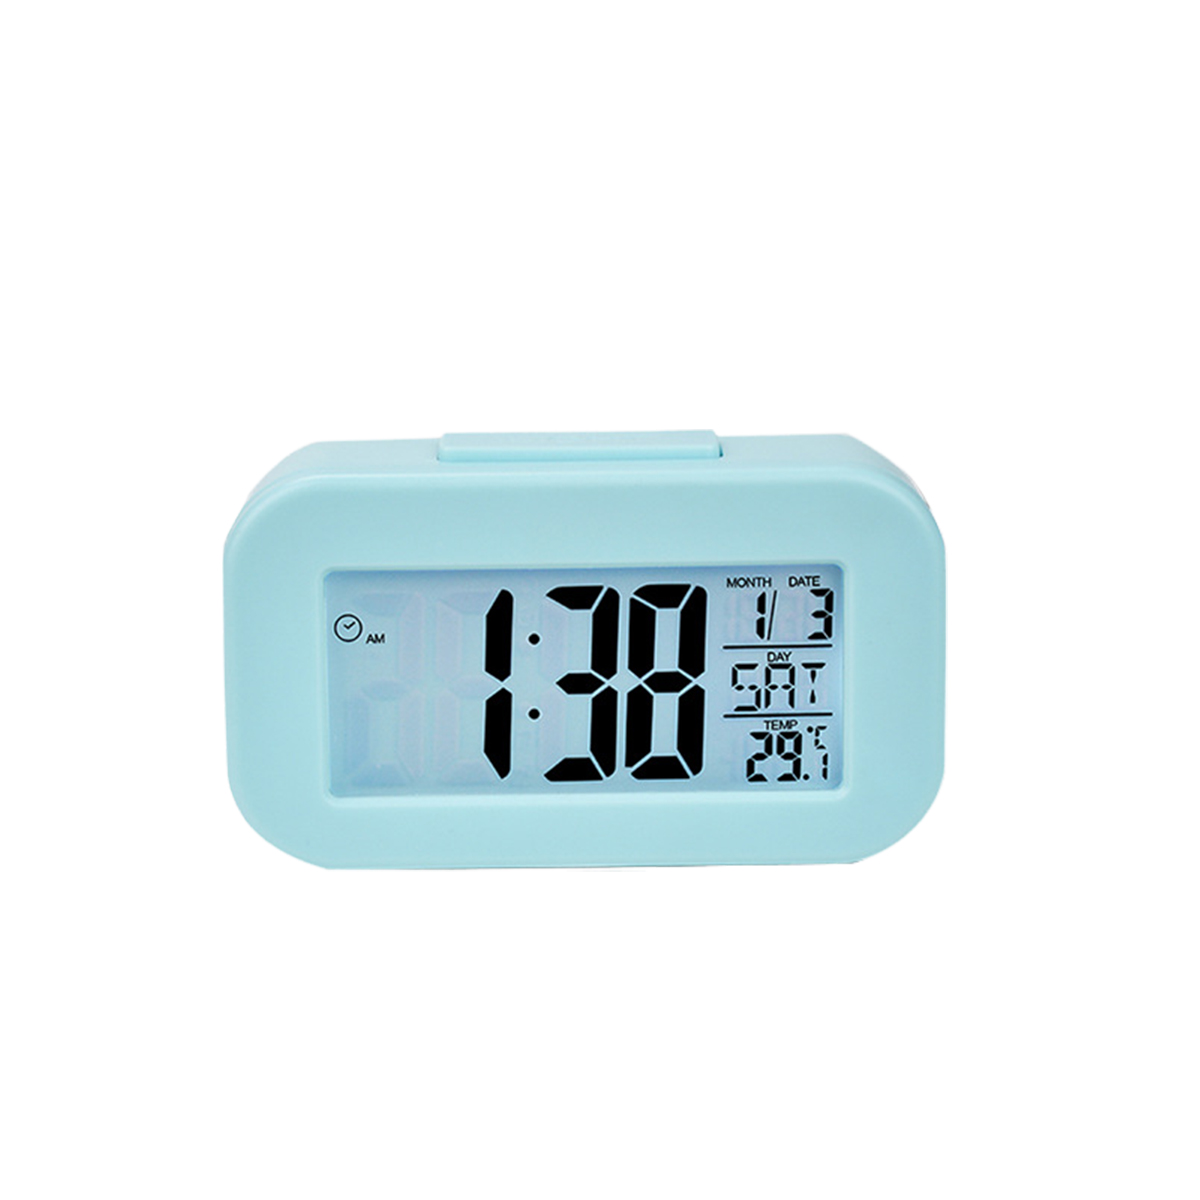 BRIGHTAKE Elektronische Uhr Wecker LED-Display Alarm Alarm Snooze-Funktion